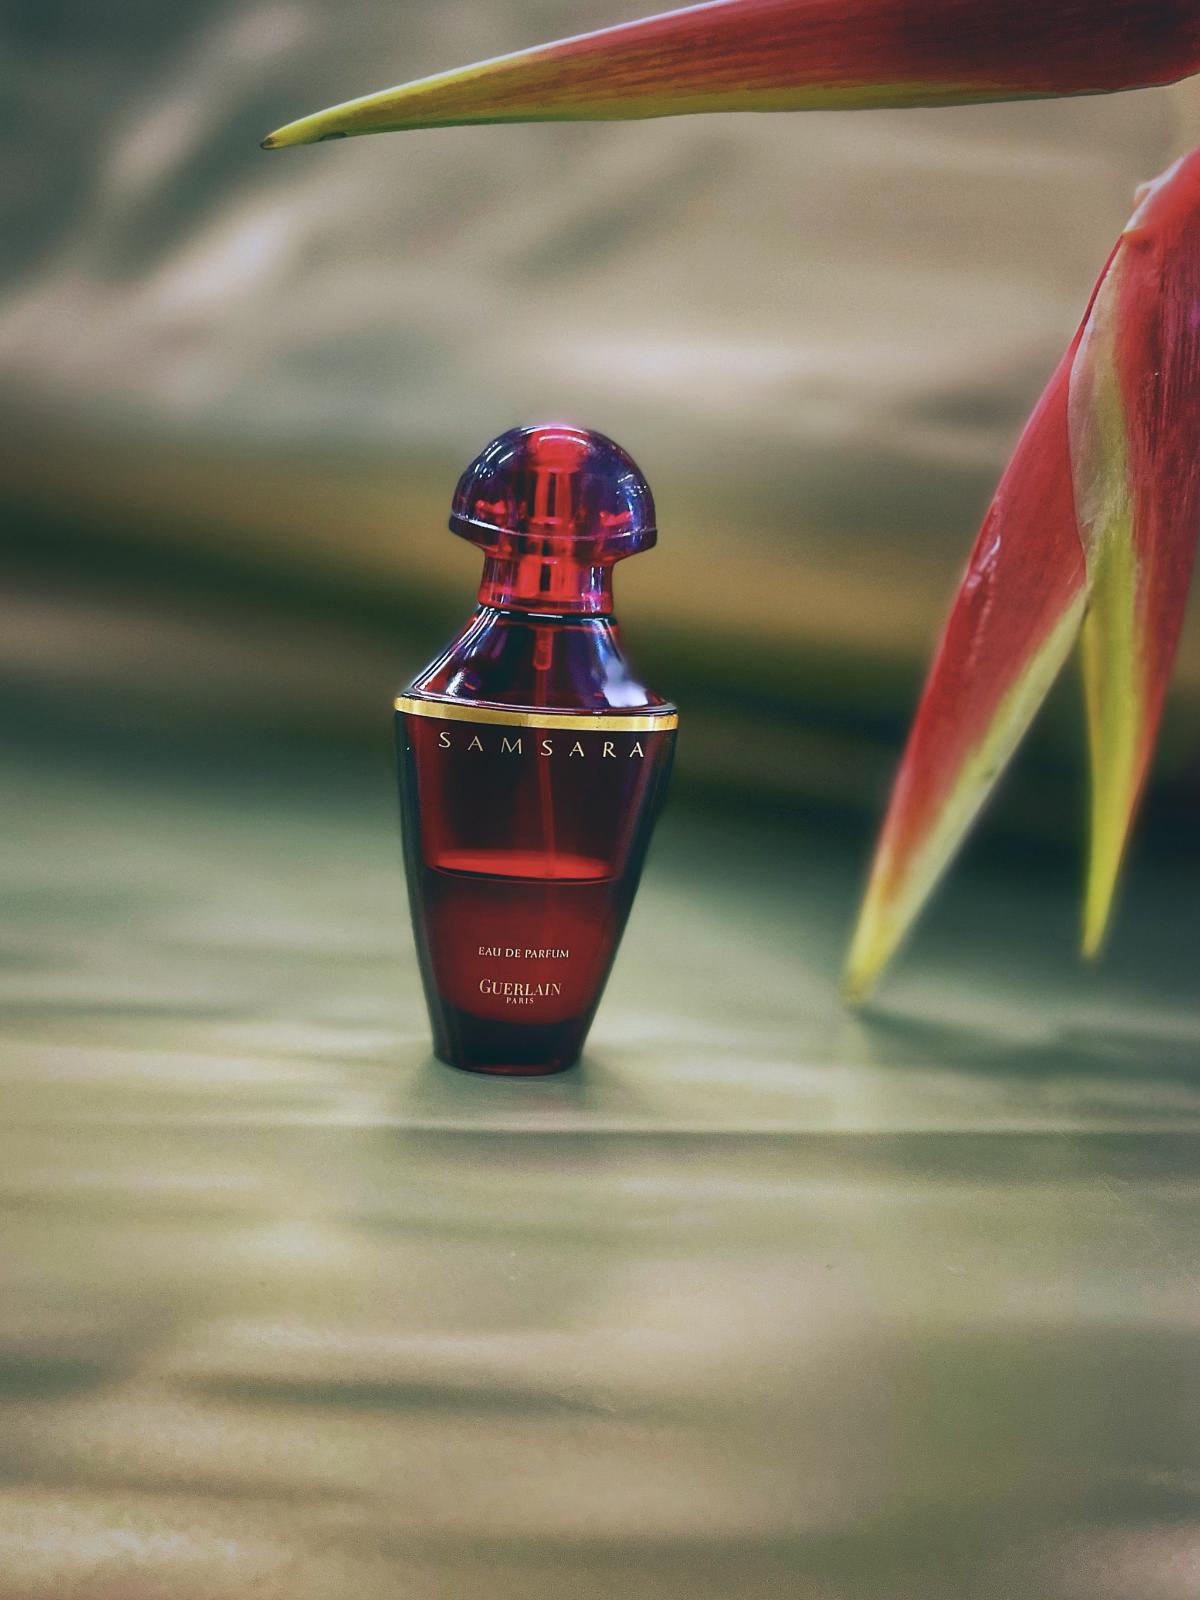 Samsara Eau de Parfum Guerlain perfume - a fragrance for women 1989